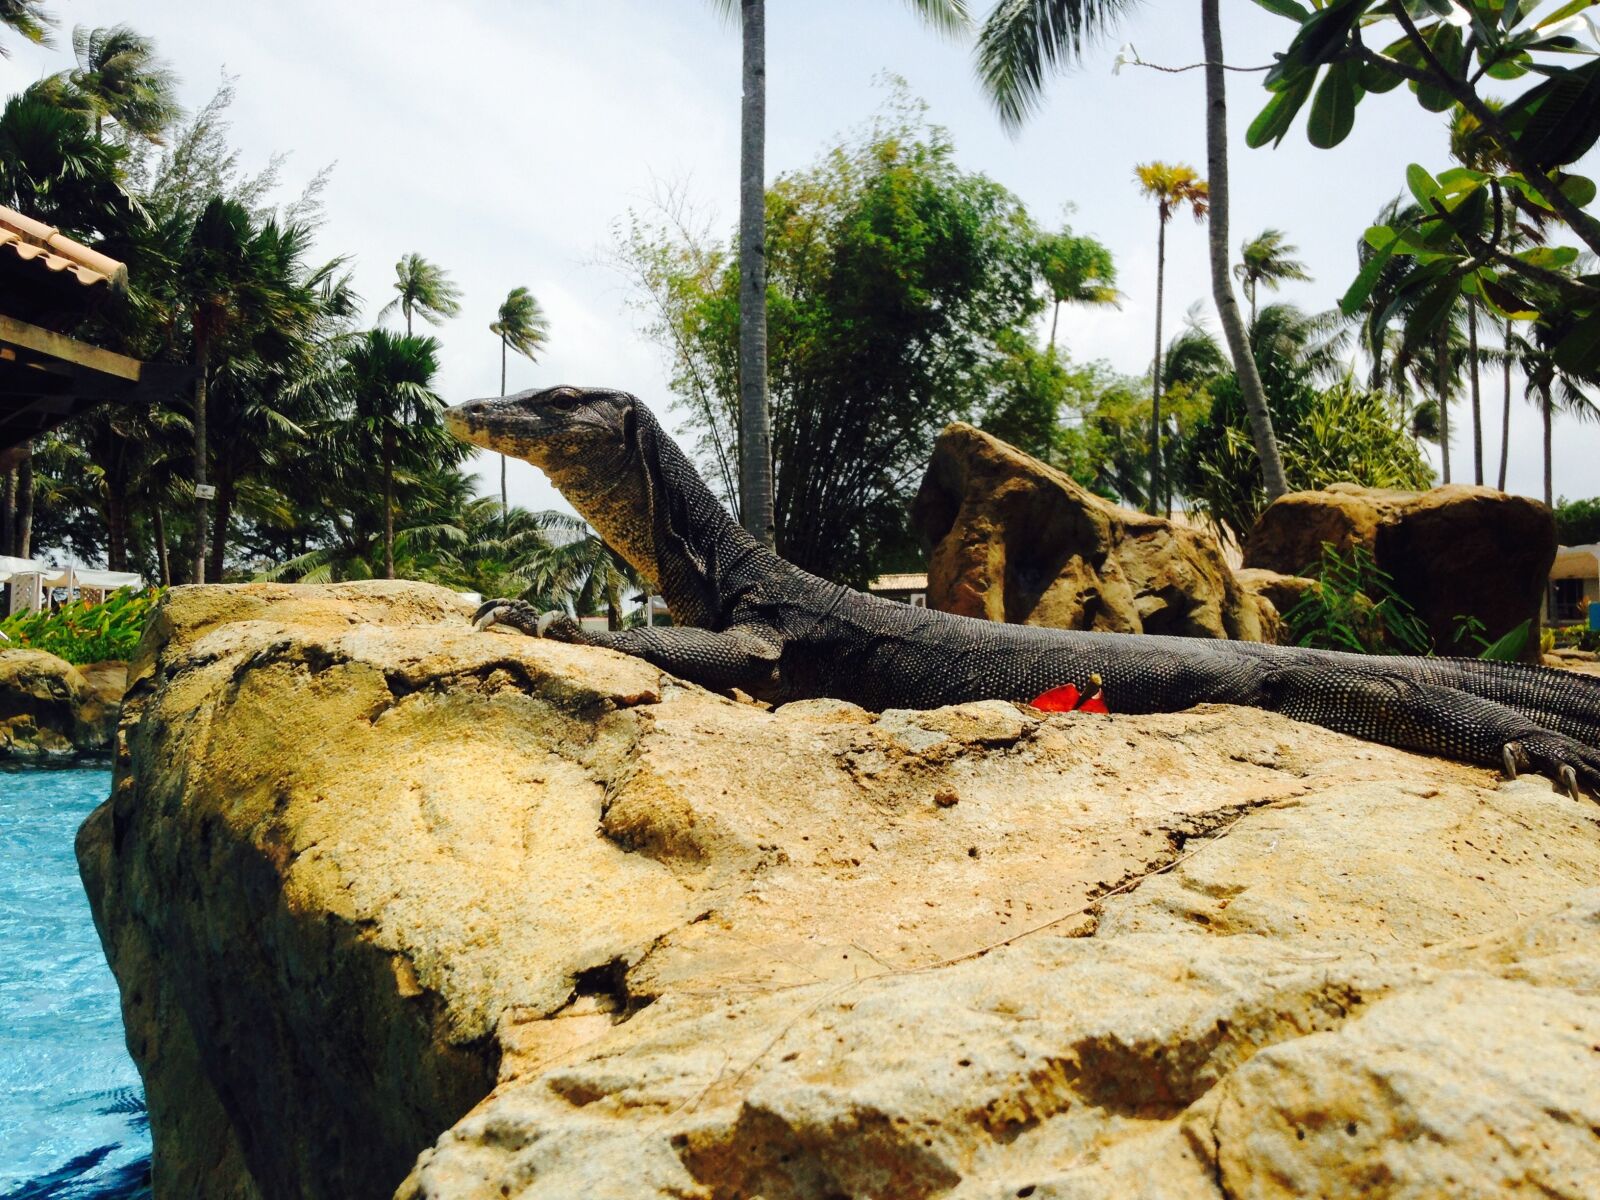 Apple iPhone 5c sample photo. Monitor lizard, sunbathing, nature photography